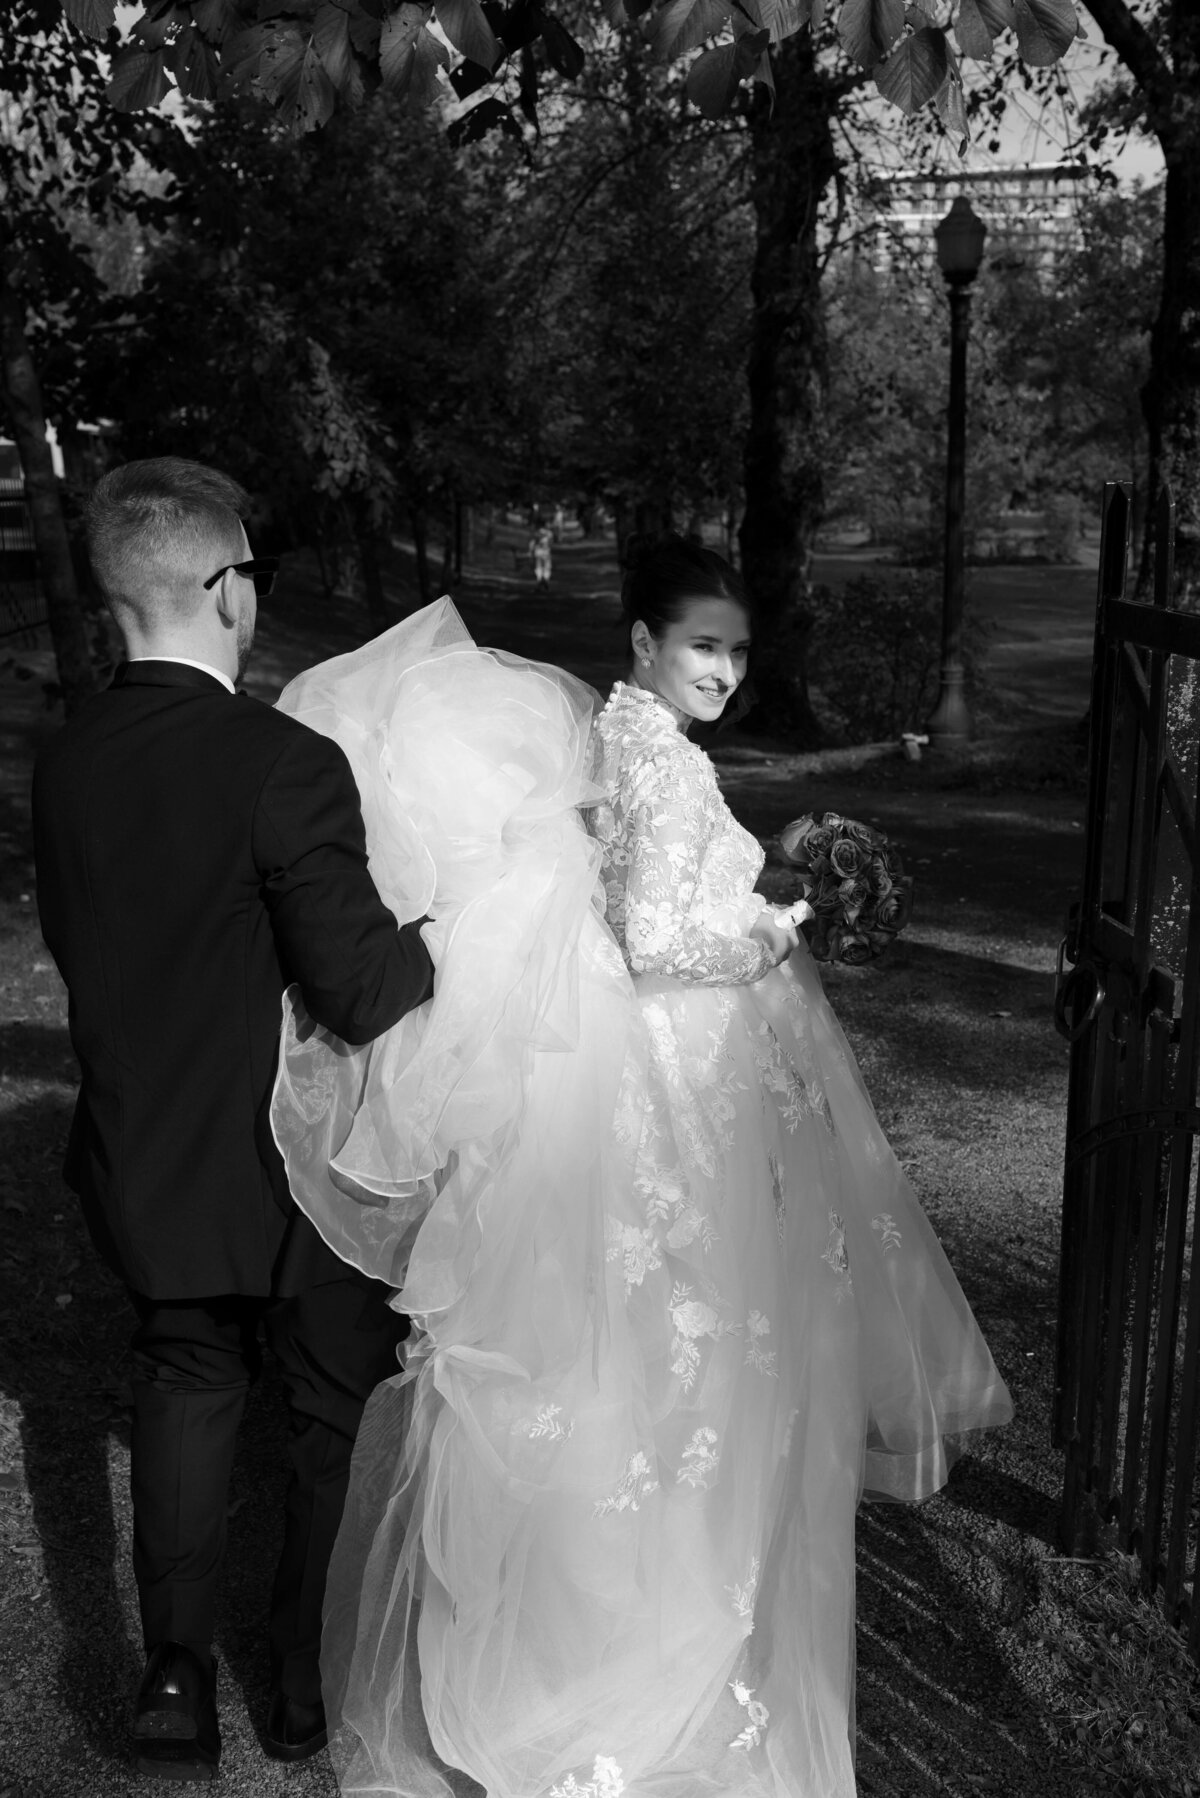 Bride walking out before wedding, having dress held up